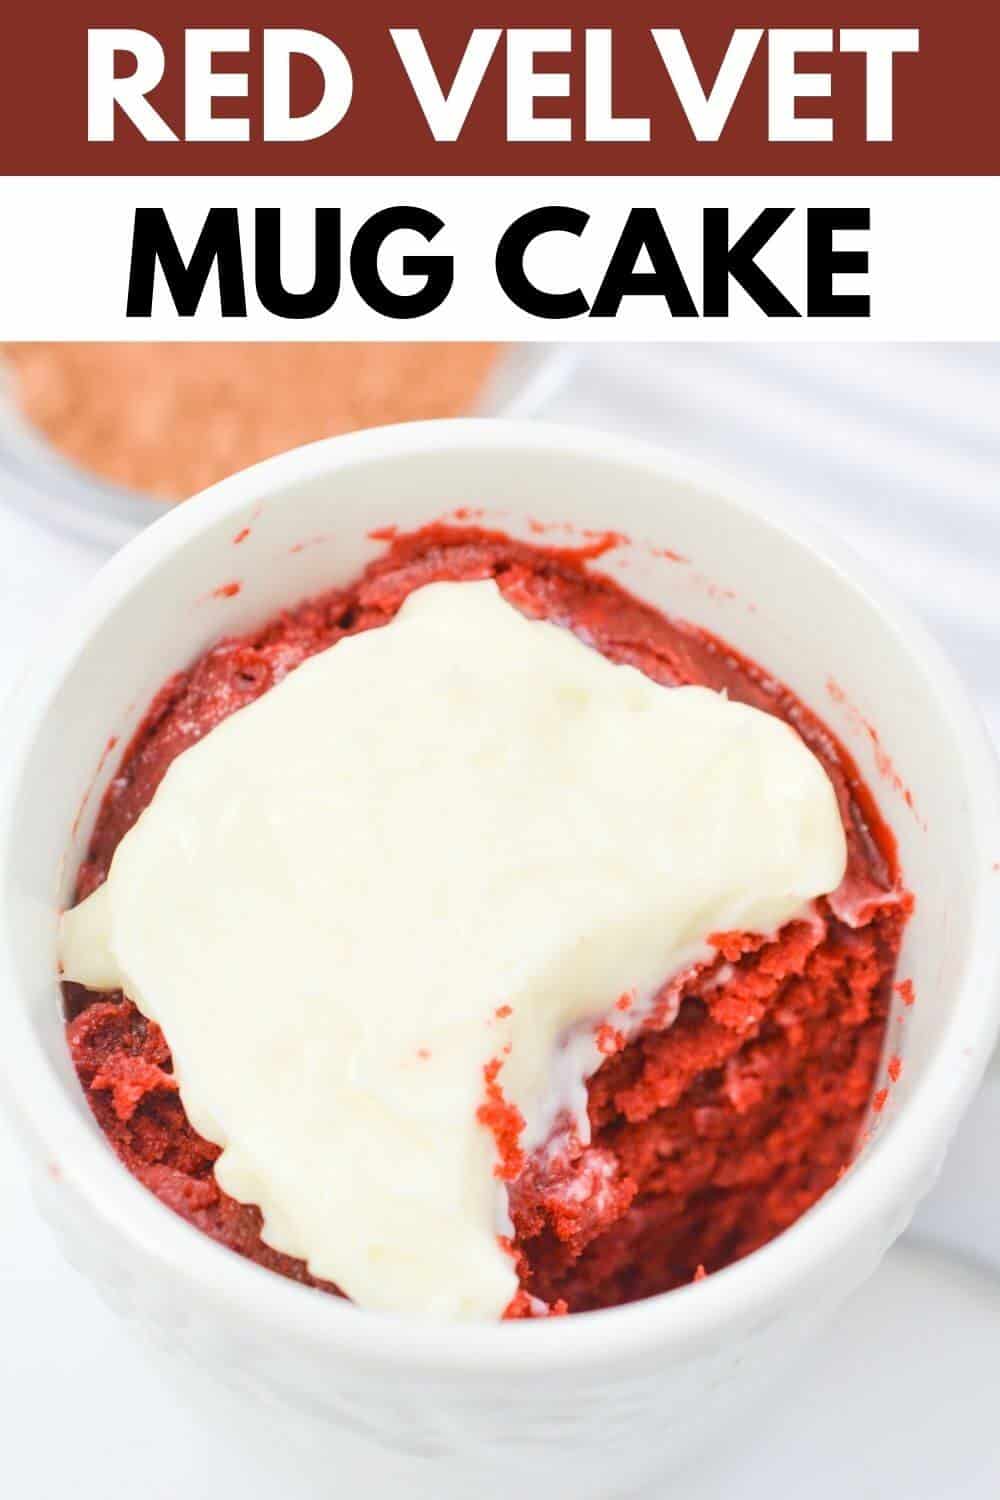 Red velvet mug cake with recipe title text overlay.